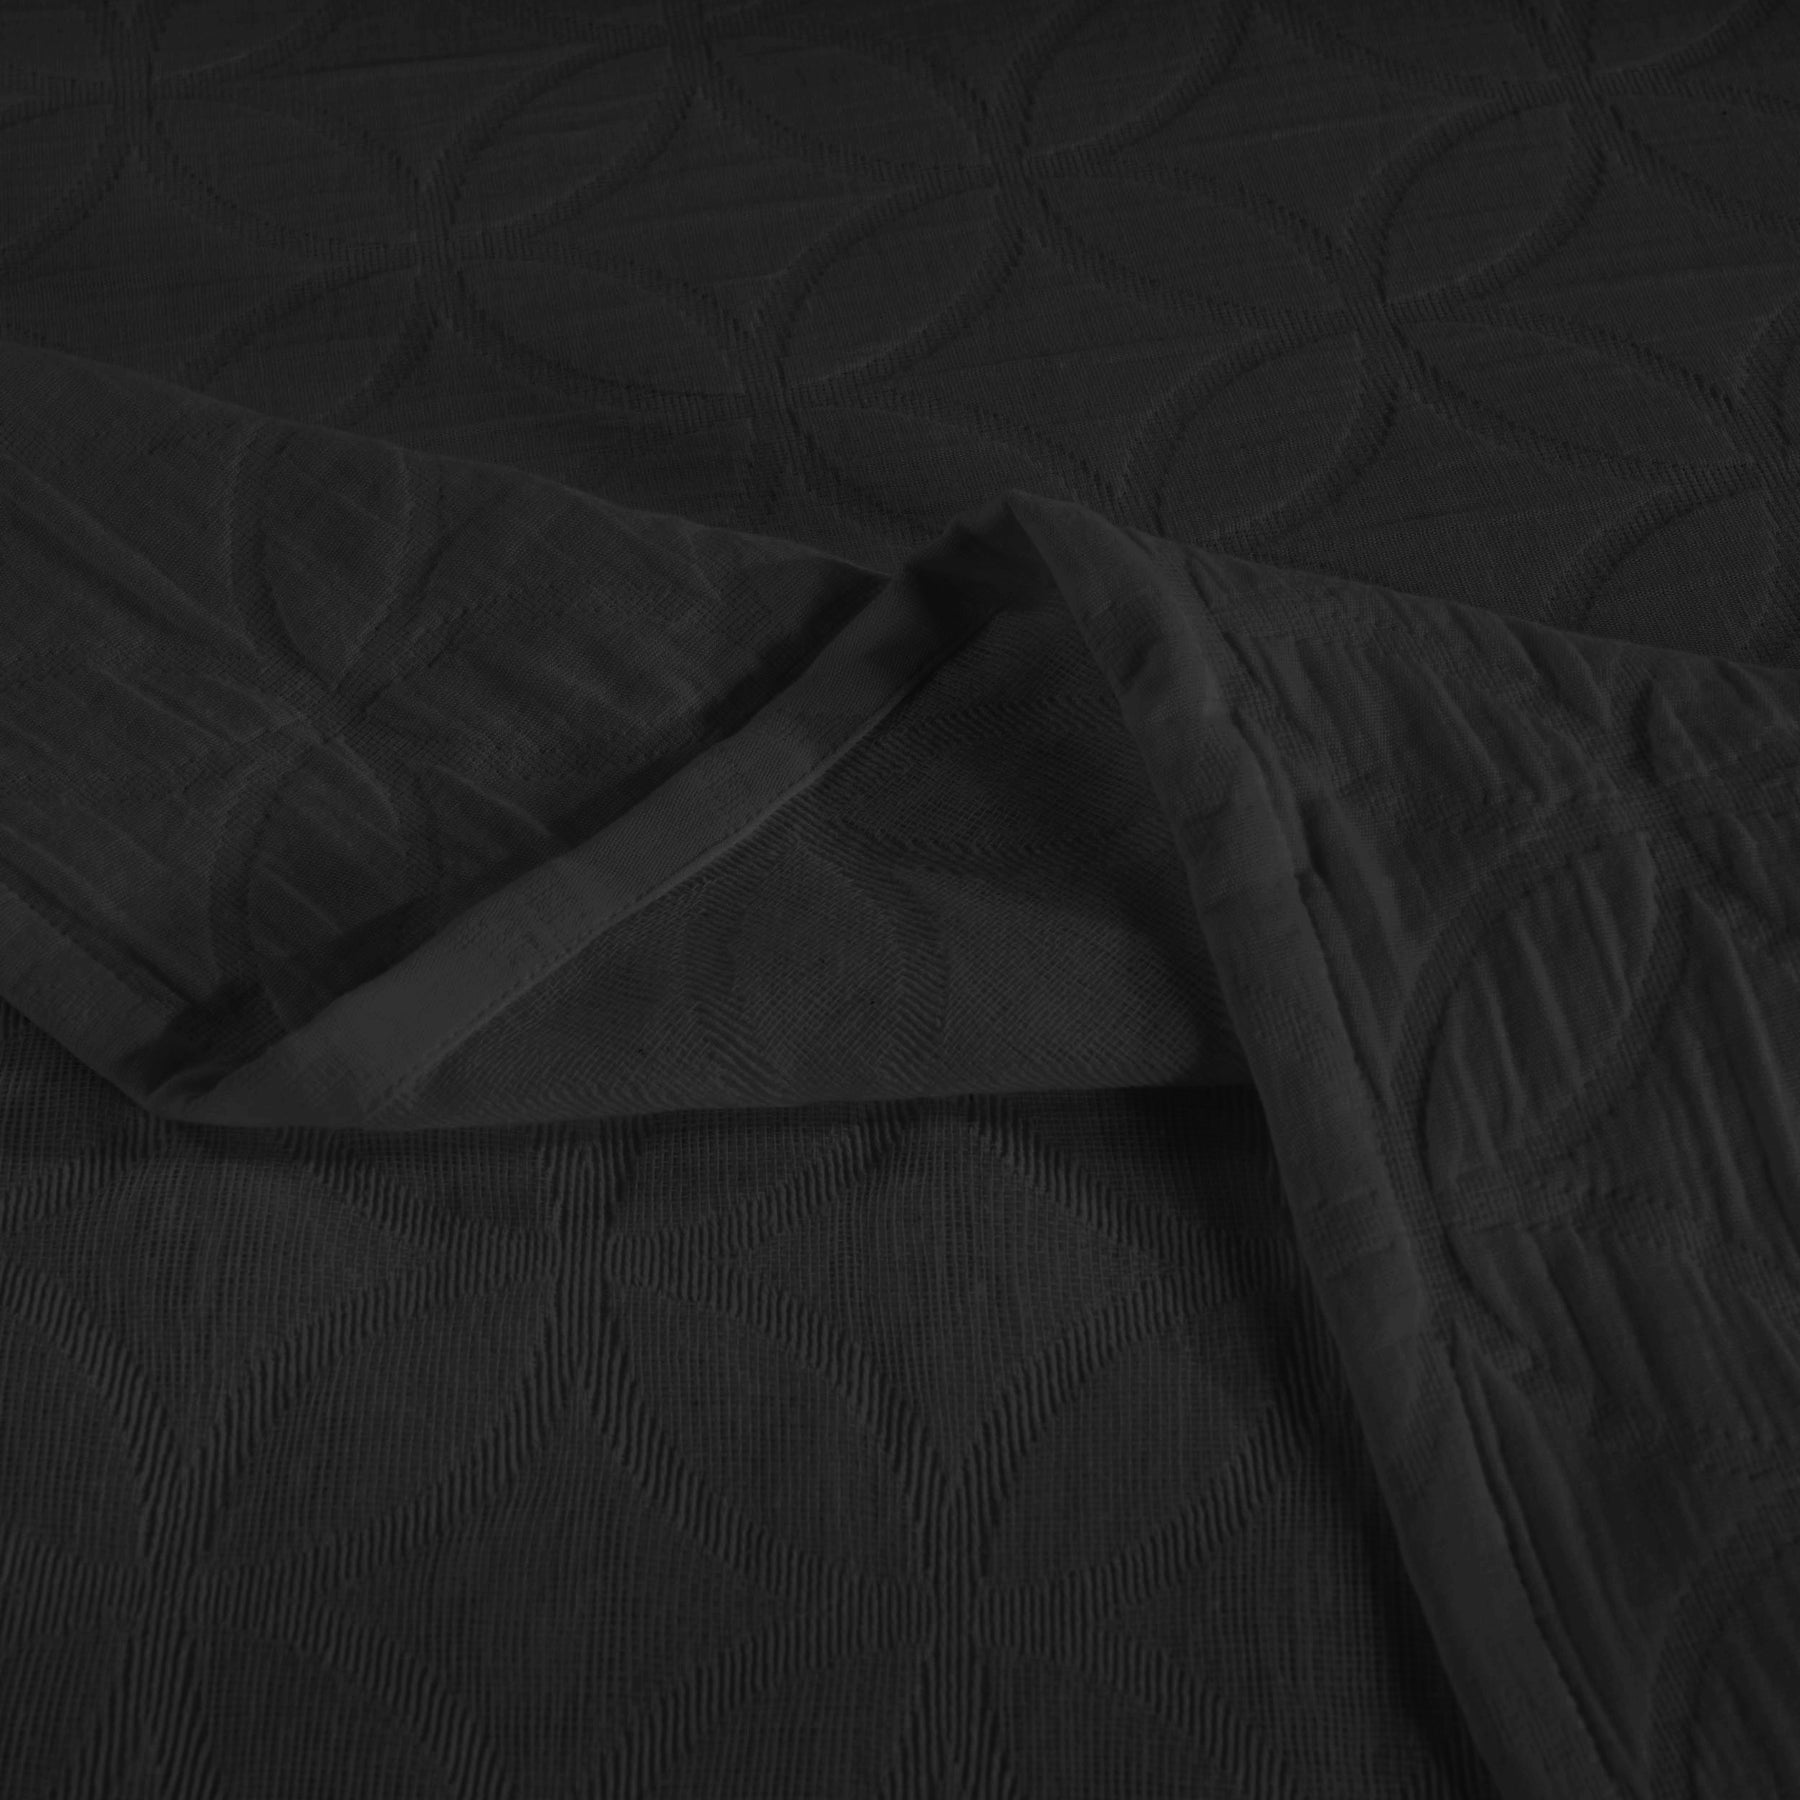 Serenity Cotton Matelasse Weave Jacquard Celtic Circle Bedspread Set - Black